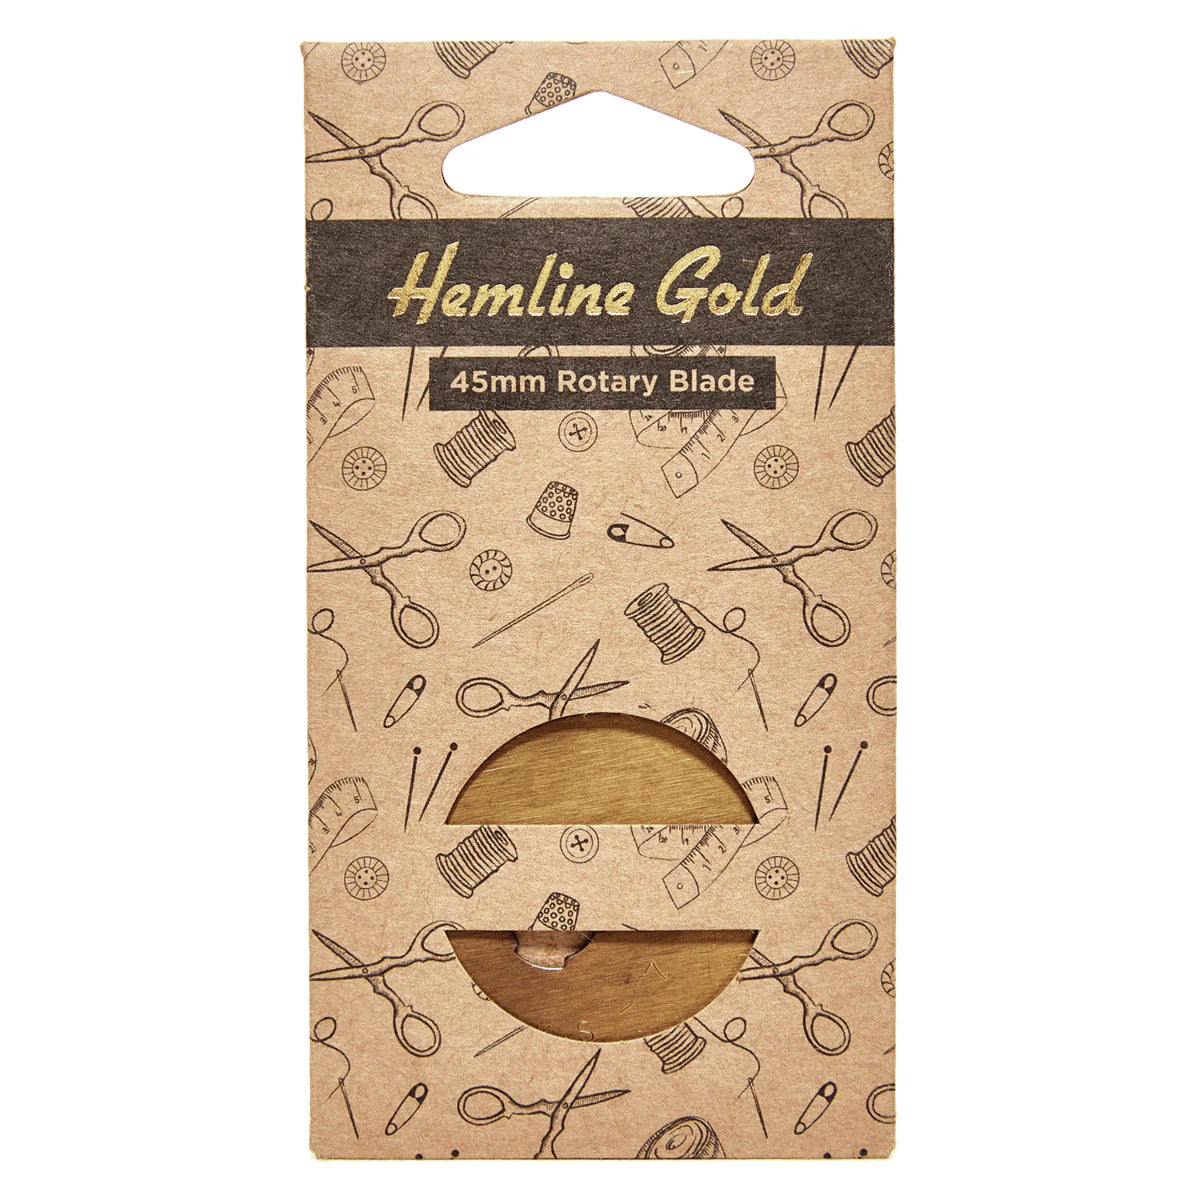 Hemline Gold – 45mm Rotary Blade